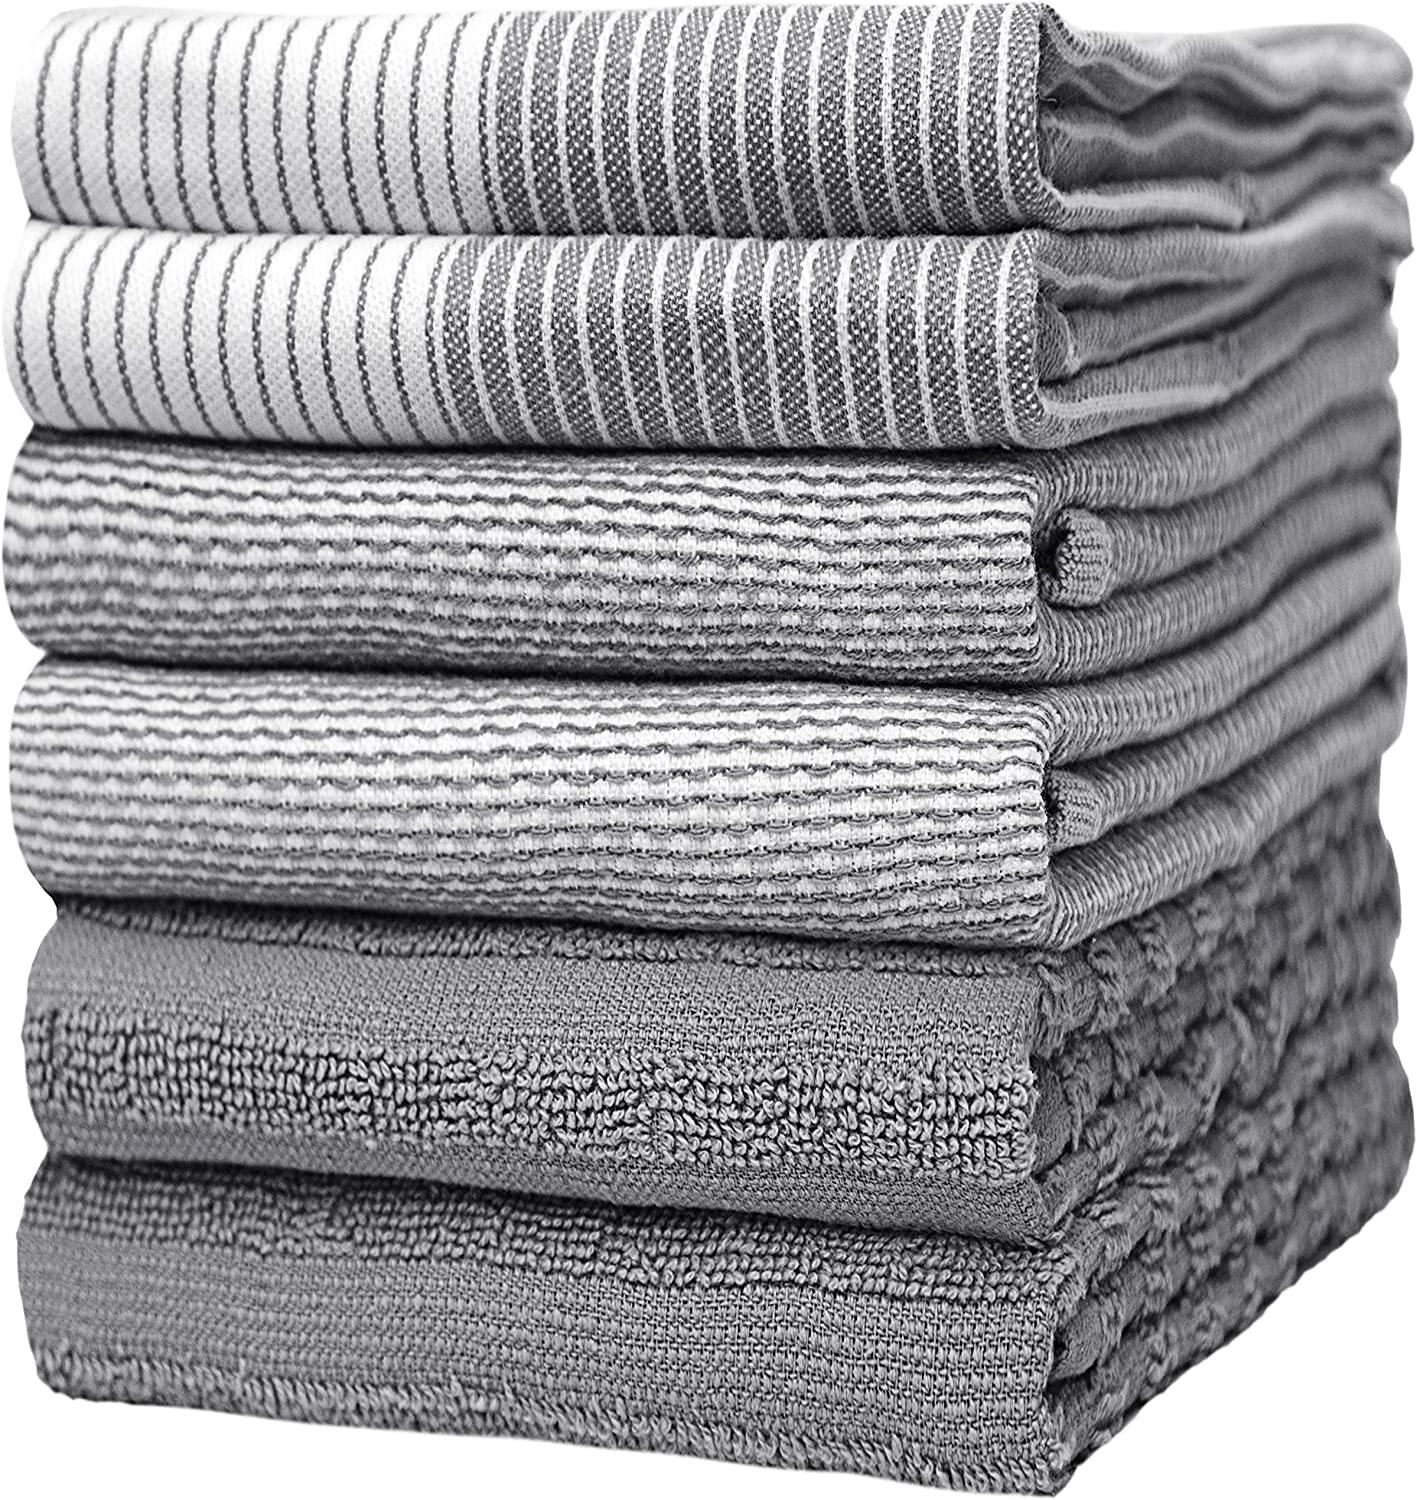 Bumble Towels Ultra Soft Eco-Friendly Dish Towels, 6-Pack